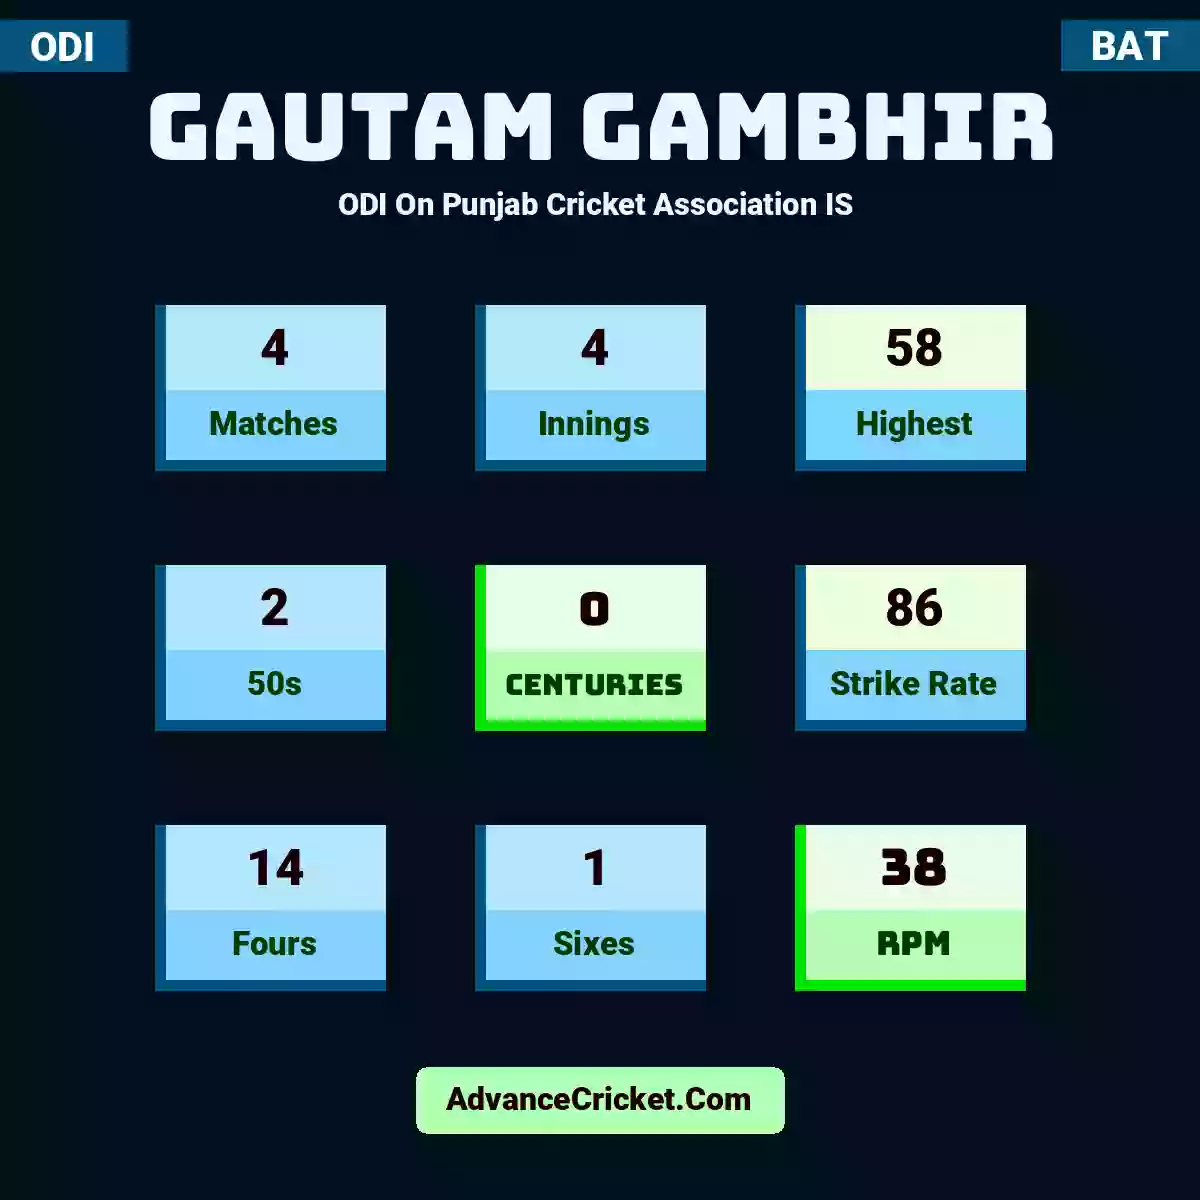 Gautam Gambhir ODI  On Punjab Cricket Association IS , Gautam Gambhir played 4 matches, scored 58 runs as highest, 2 half-centuries, and 0 centuries, with a strike rate of 86. G.Gambhir hit 14 fours and 1 sixes, with an RPM of 38.